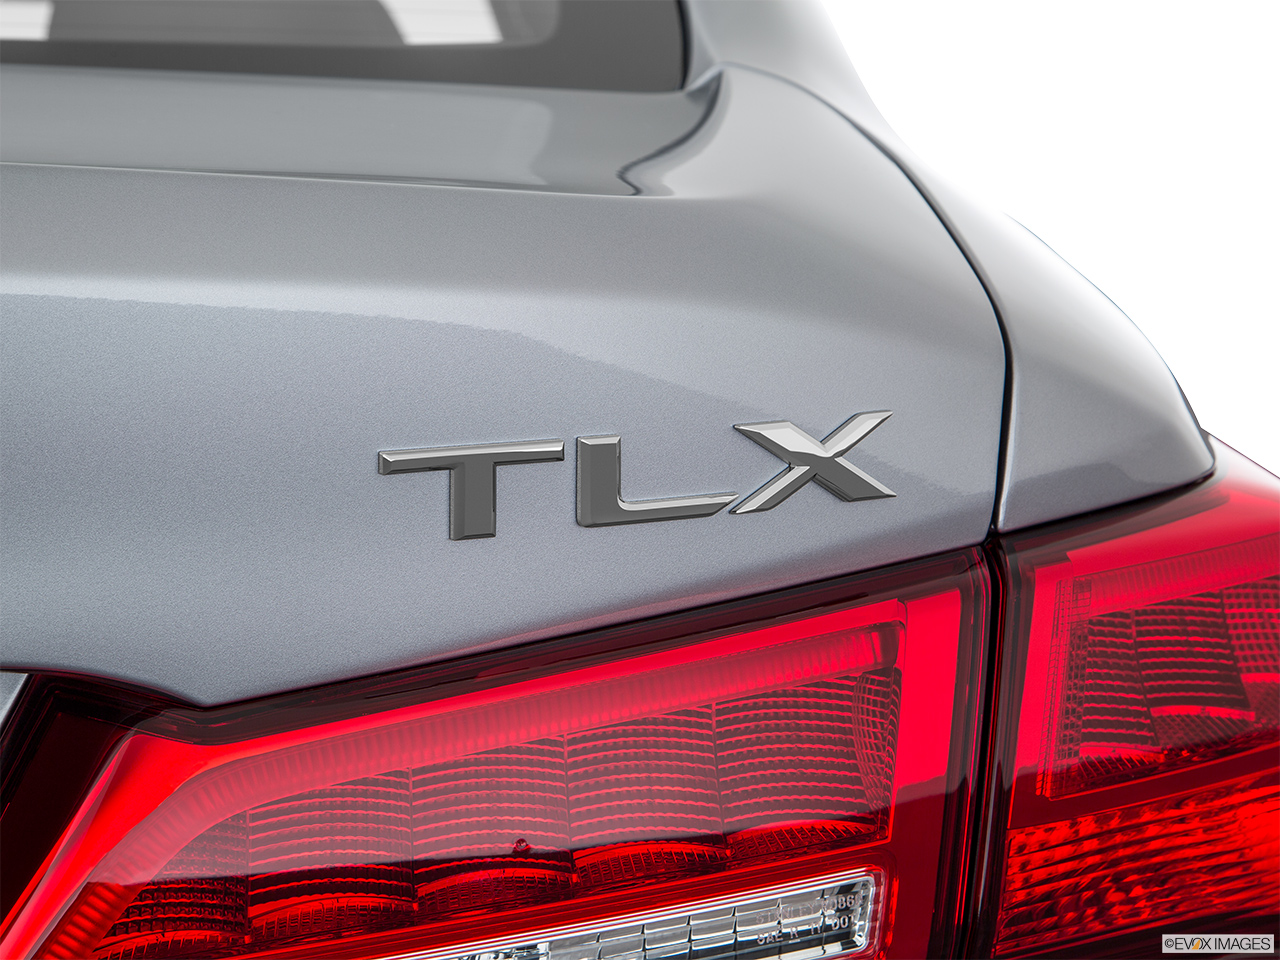 2019 Acura TLX 2.4 8-DCT P-AWS Rear model badge/emblem 